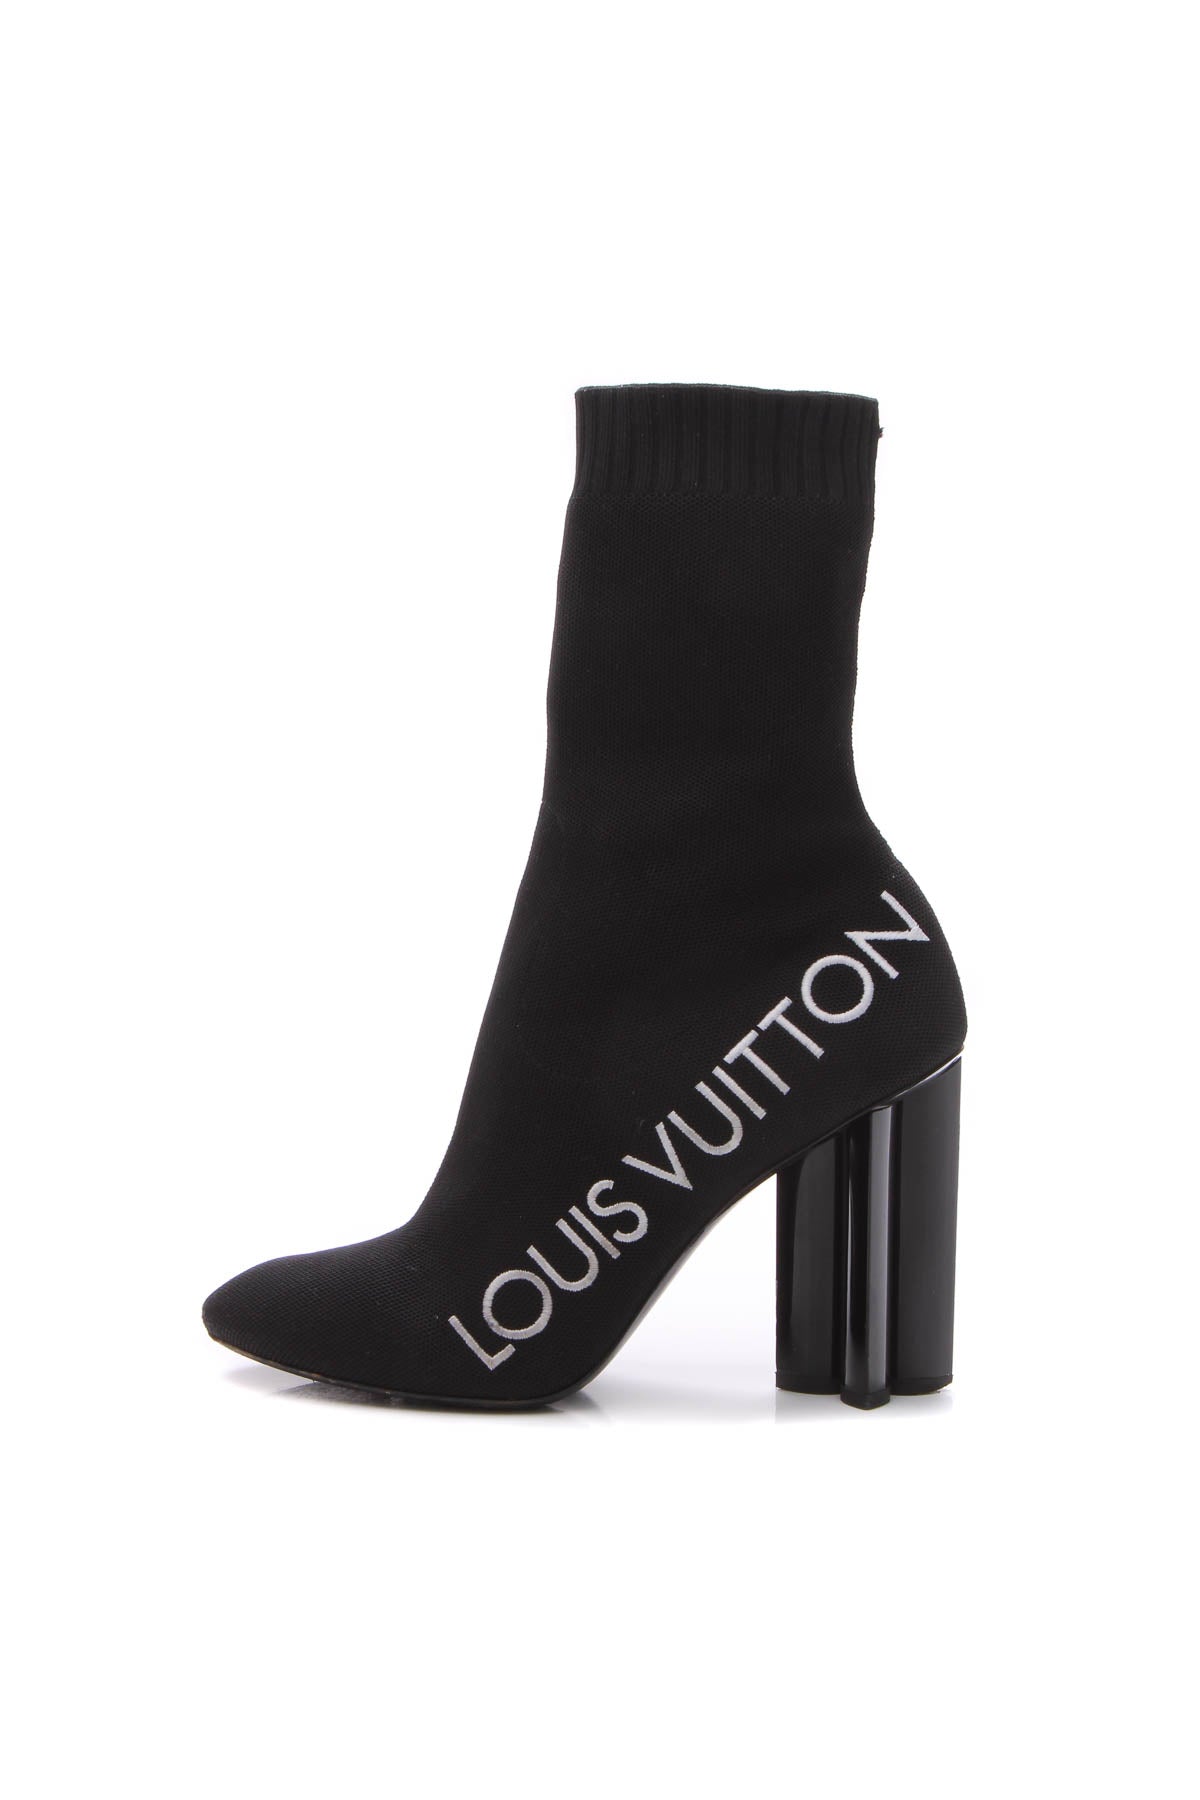 Shop Louis Vuitton Silhouette ankle boot (1A855E 1A855G, 1A8552